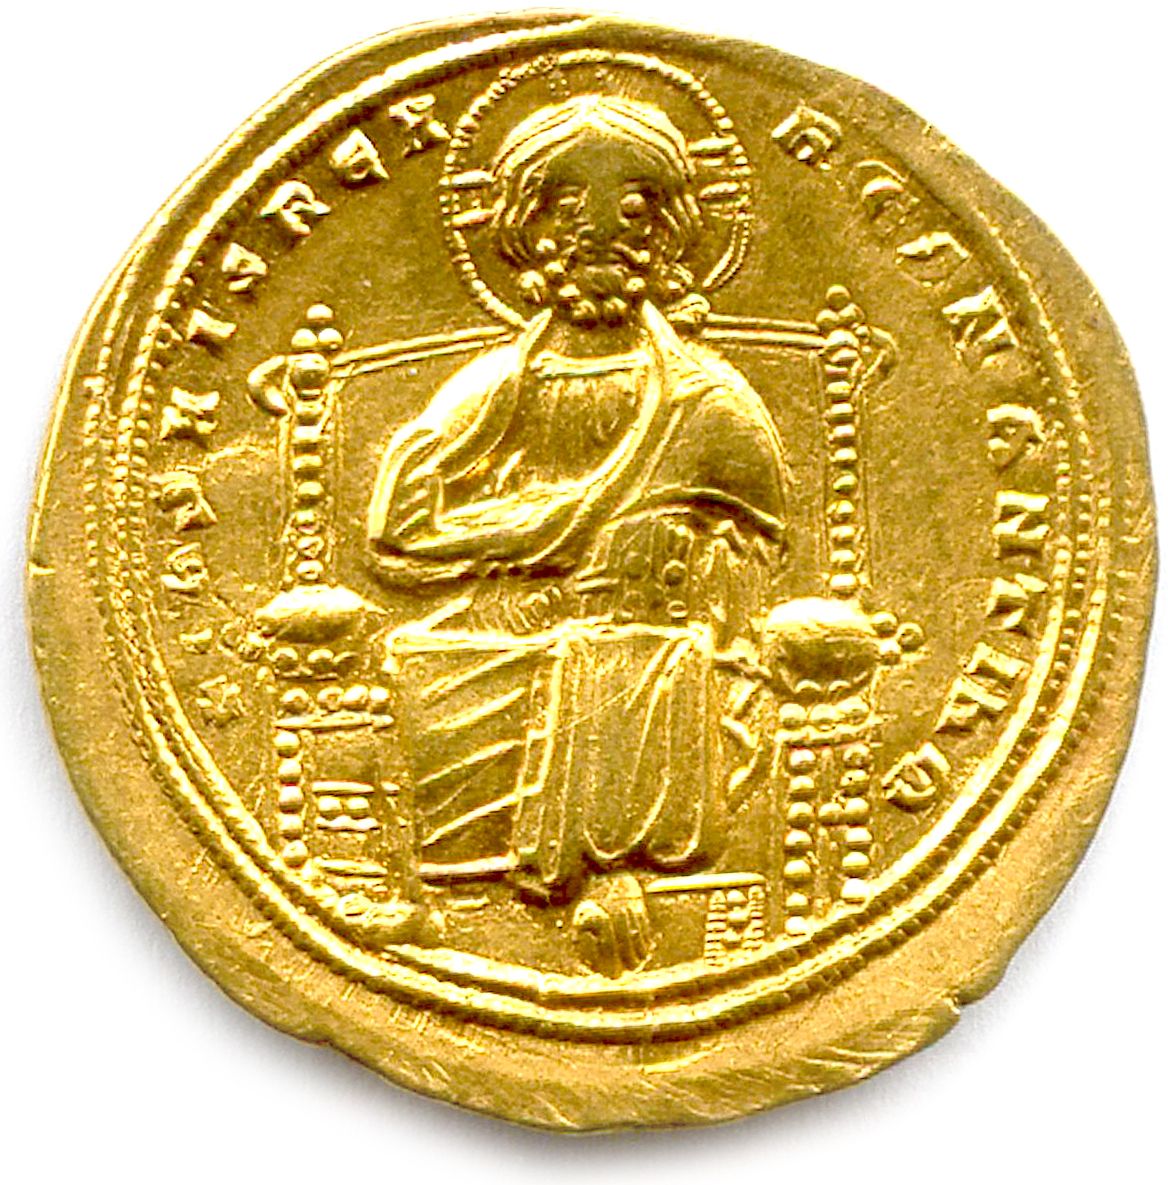 Null ROMAN III ARGYRN 12. November 1028 - 11. April 1034

IhS XIS REX REGNANTInm&hellip;